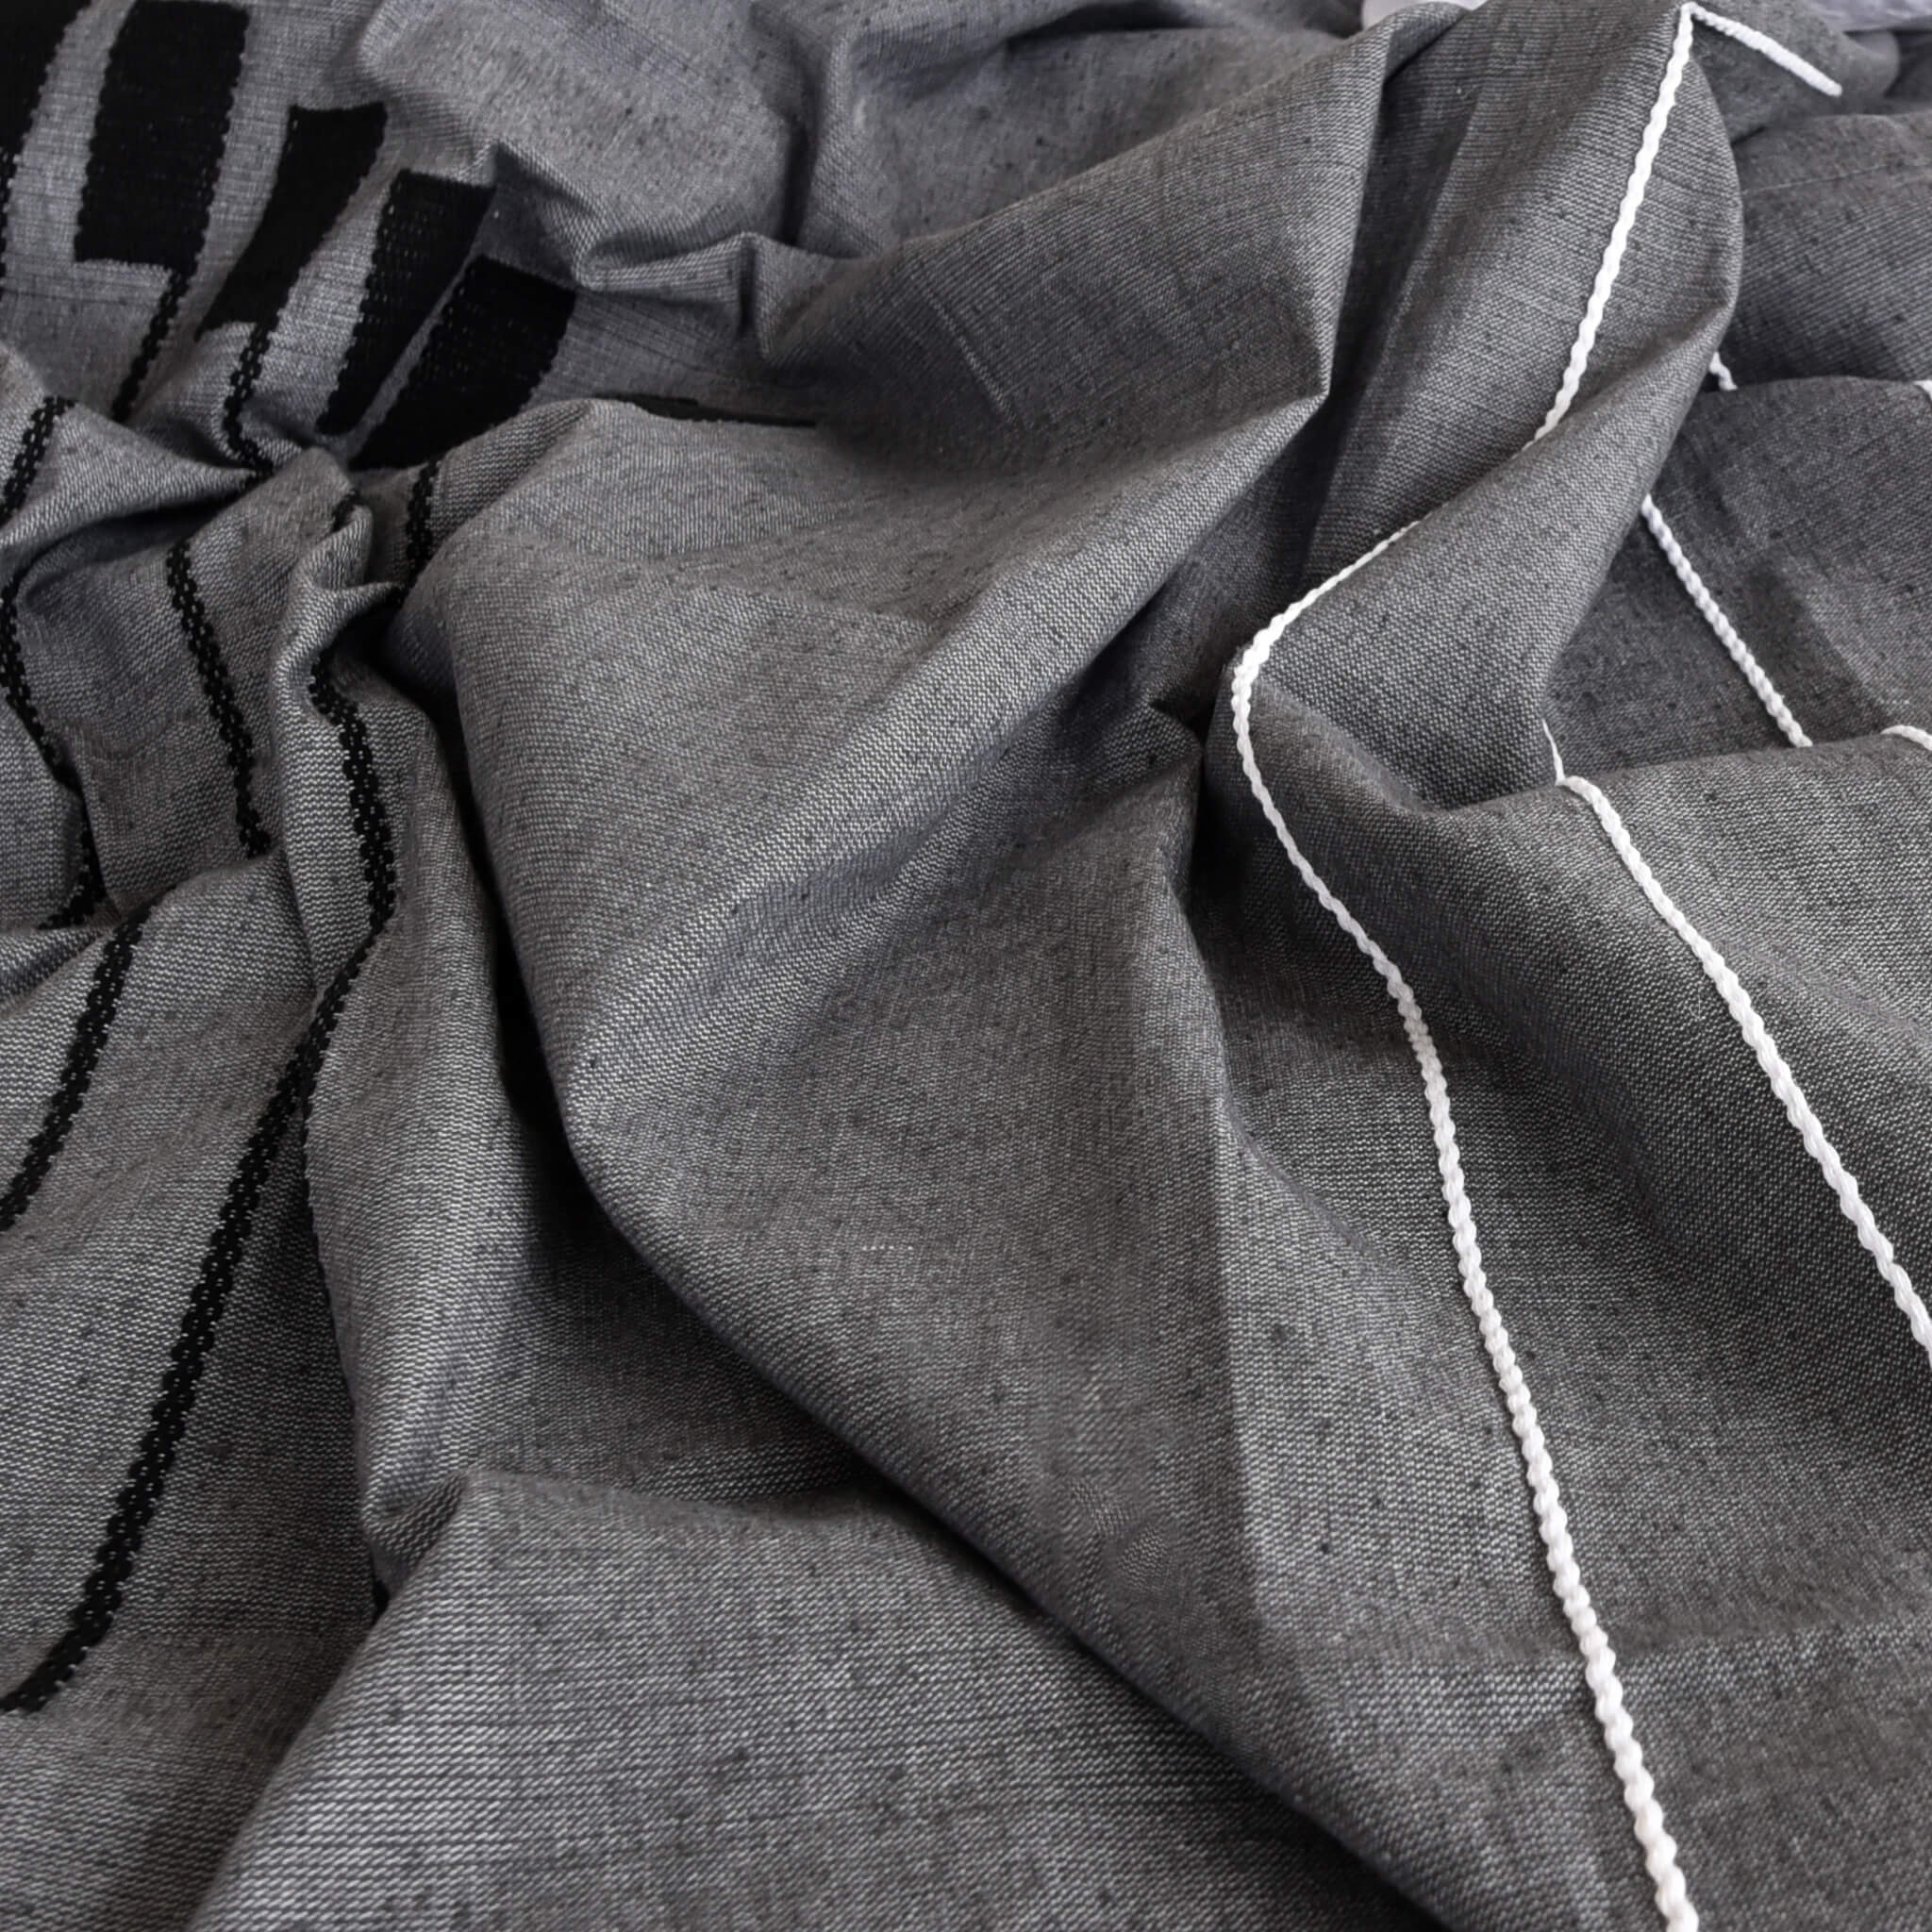 Handstitched details on a Oaxaca cotton dark gray coverlet.